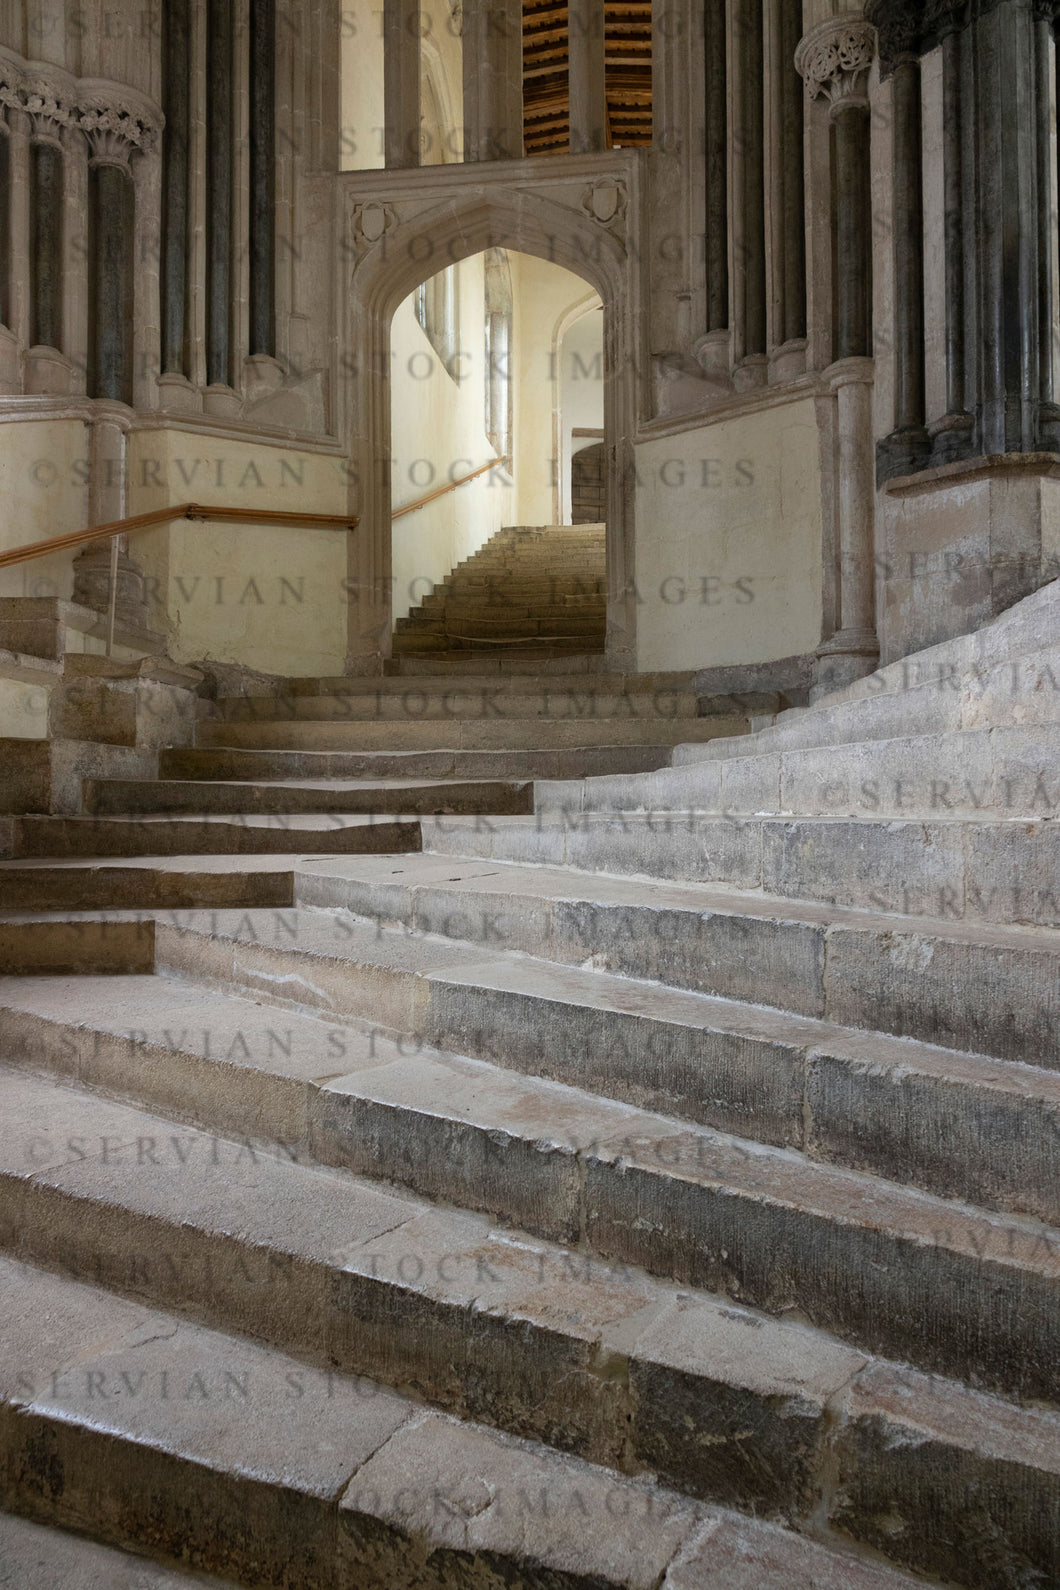 Historical building - Cathedral steps, UK (Nick 1399)